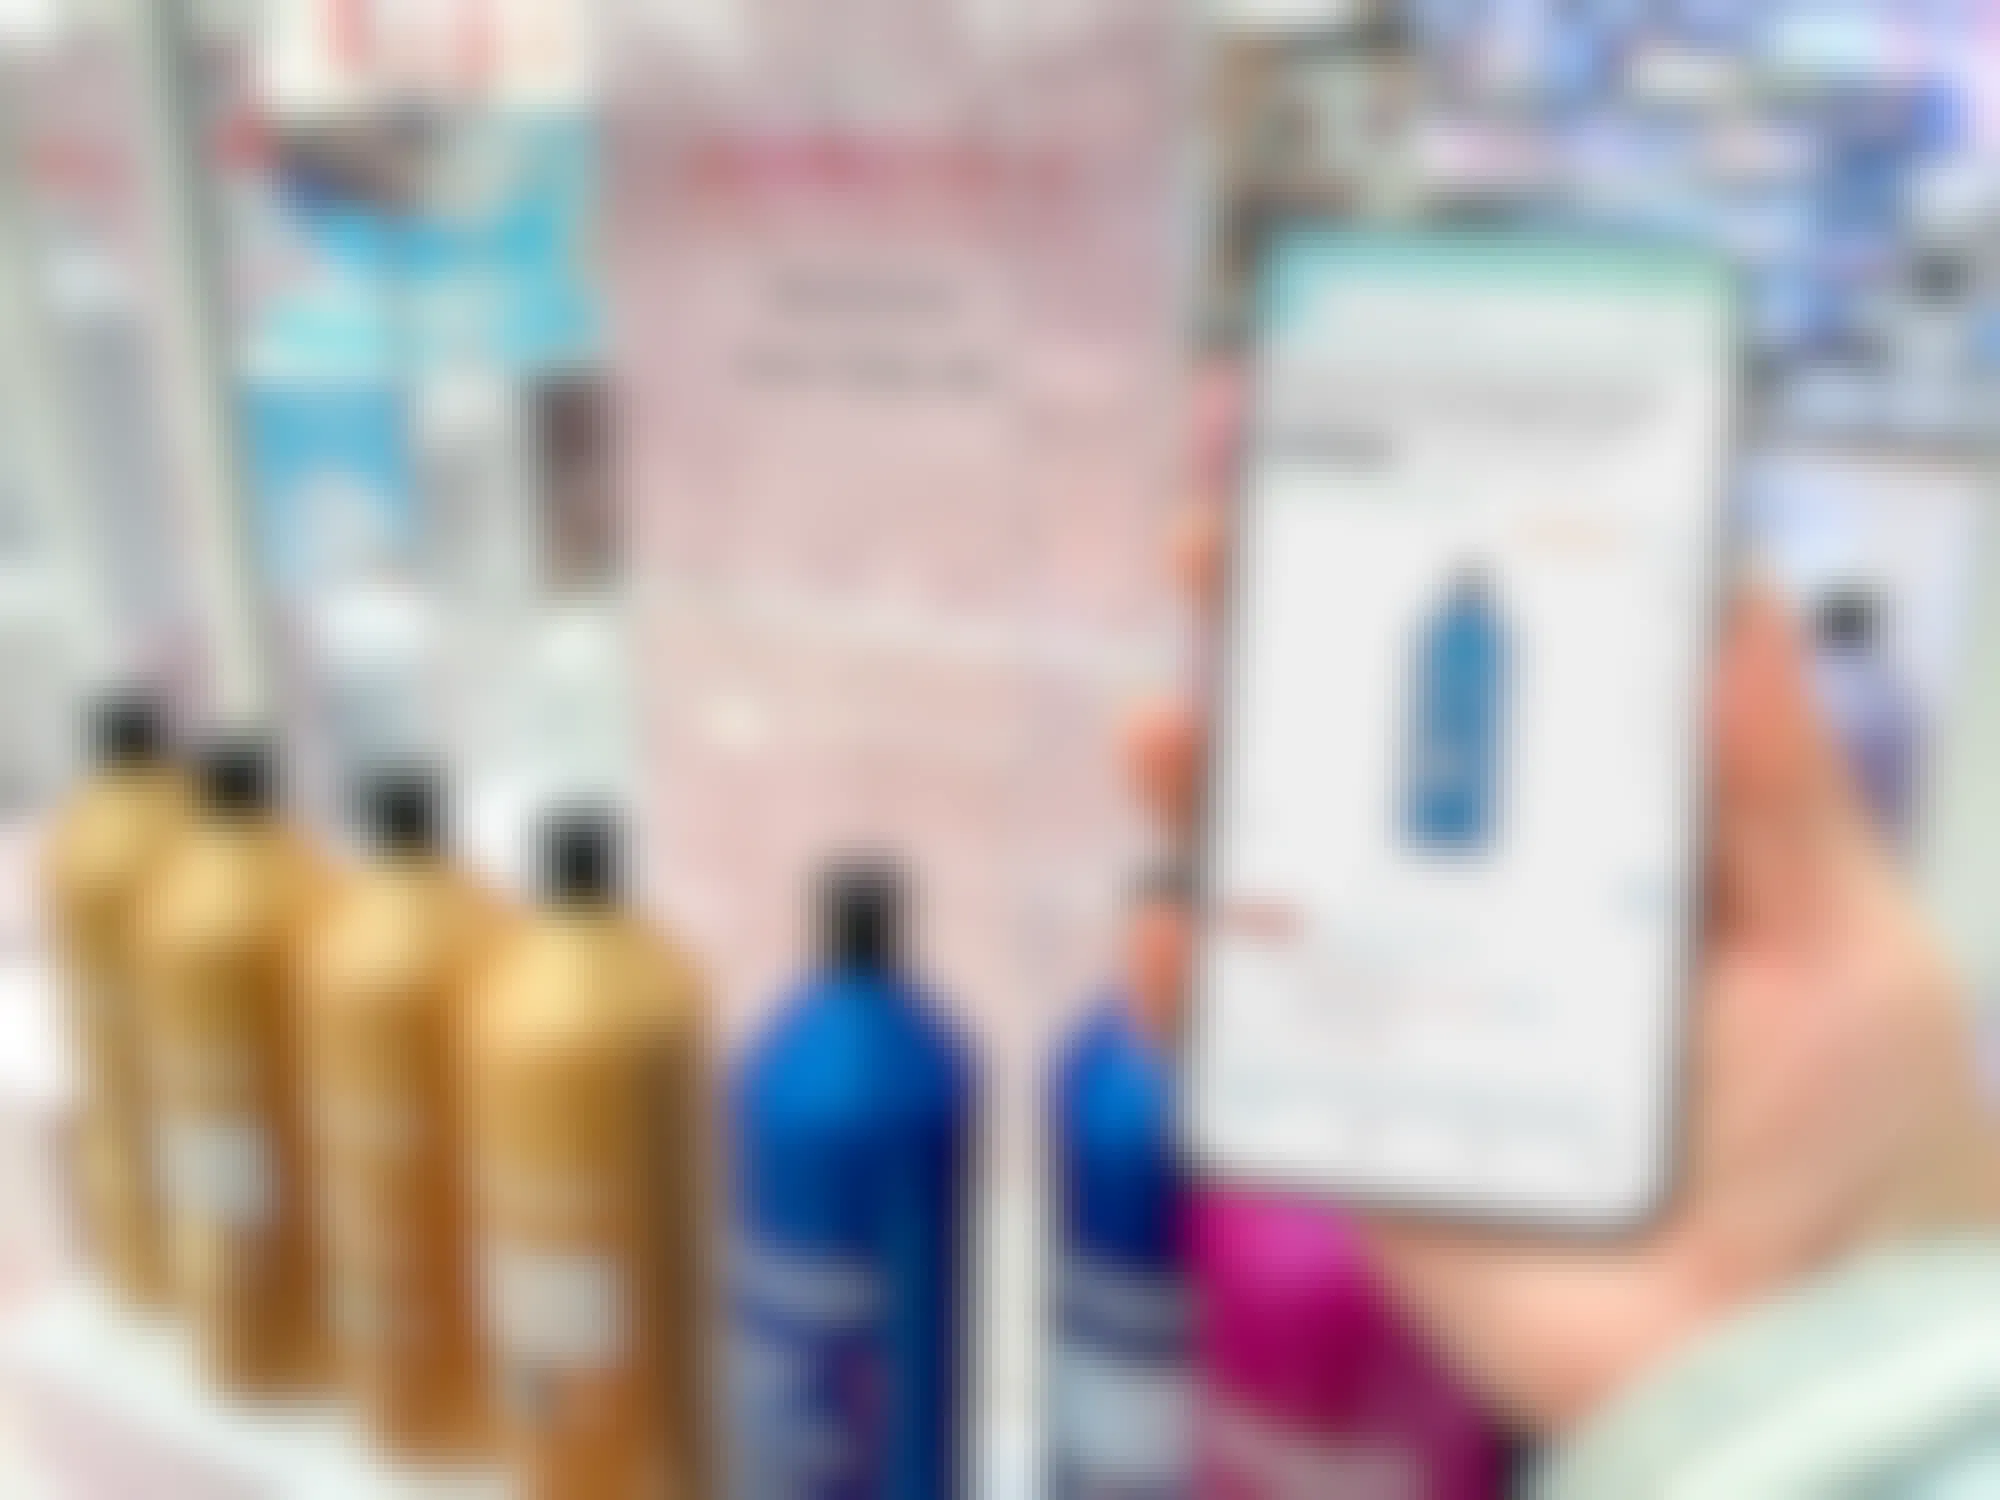 ulta jumbo love event redken shampoo with amazon screenshot on phone comparison